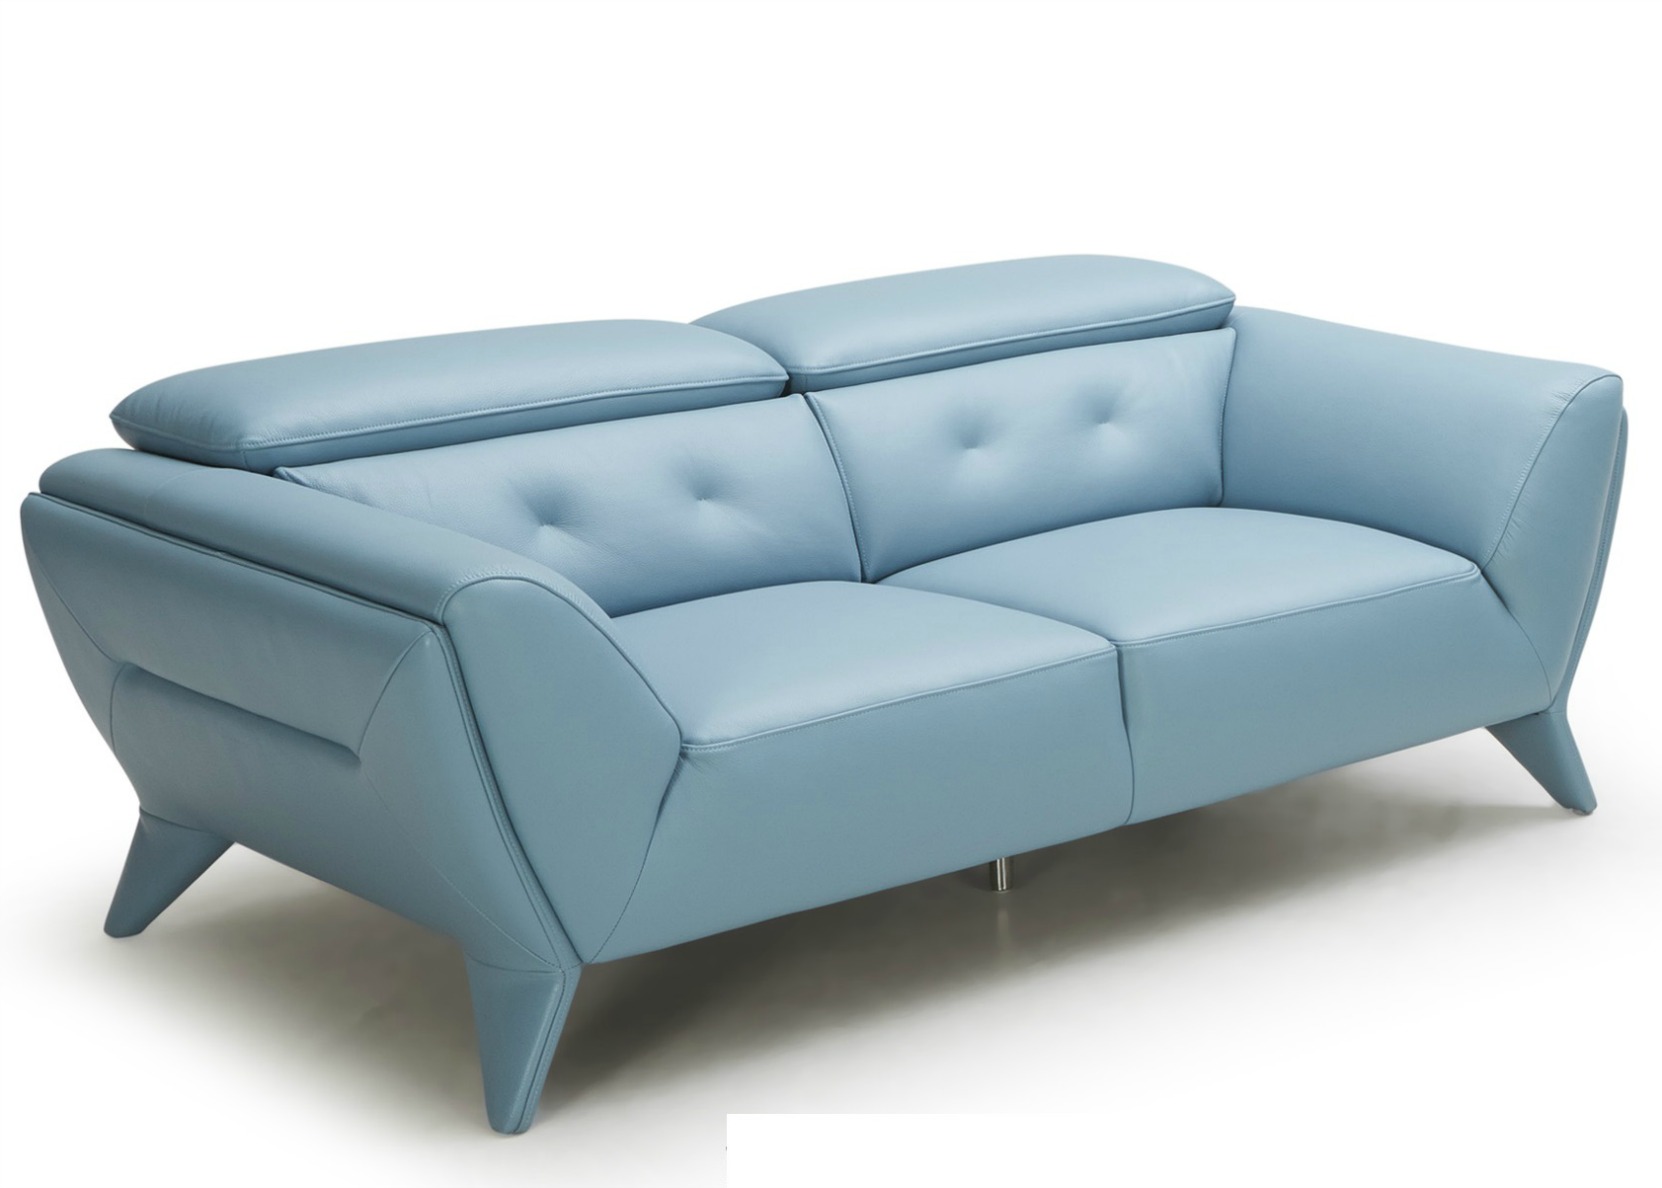 Lobelia Sofa In Light Blue Leather, Light Blue Leather Chair